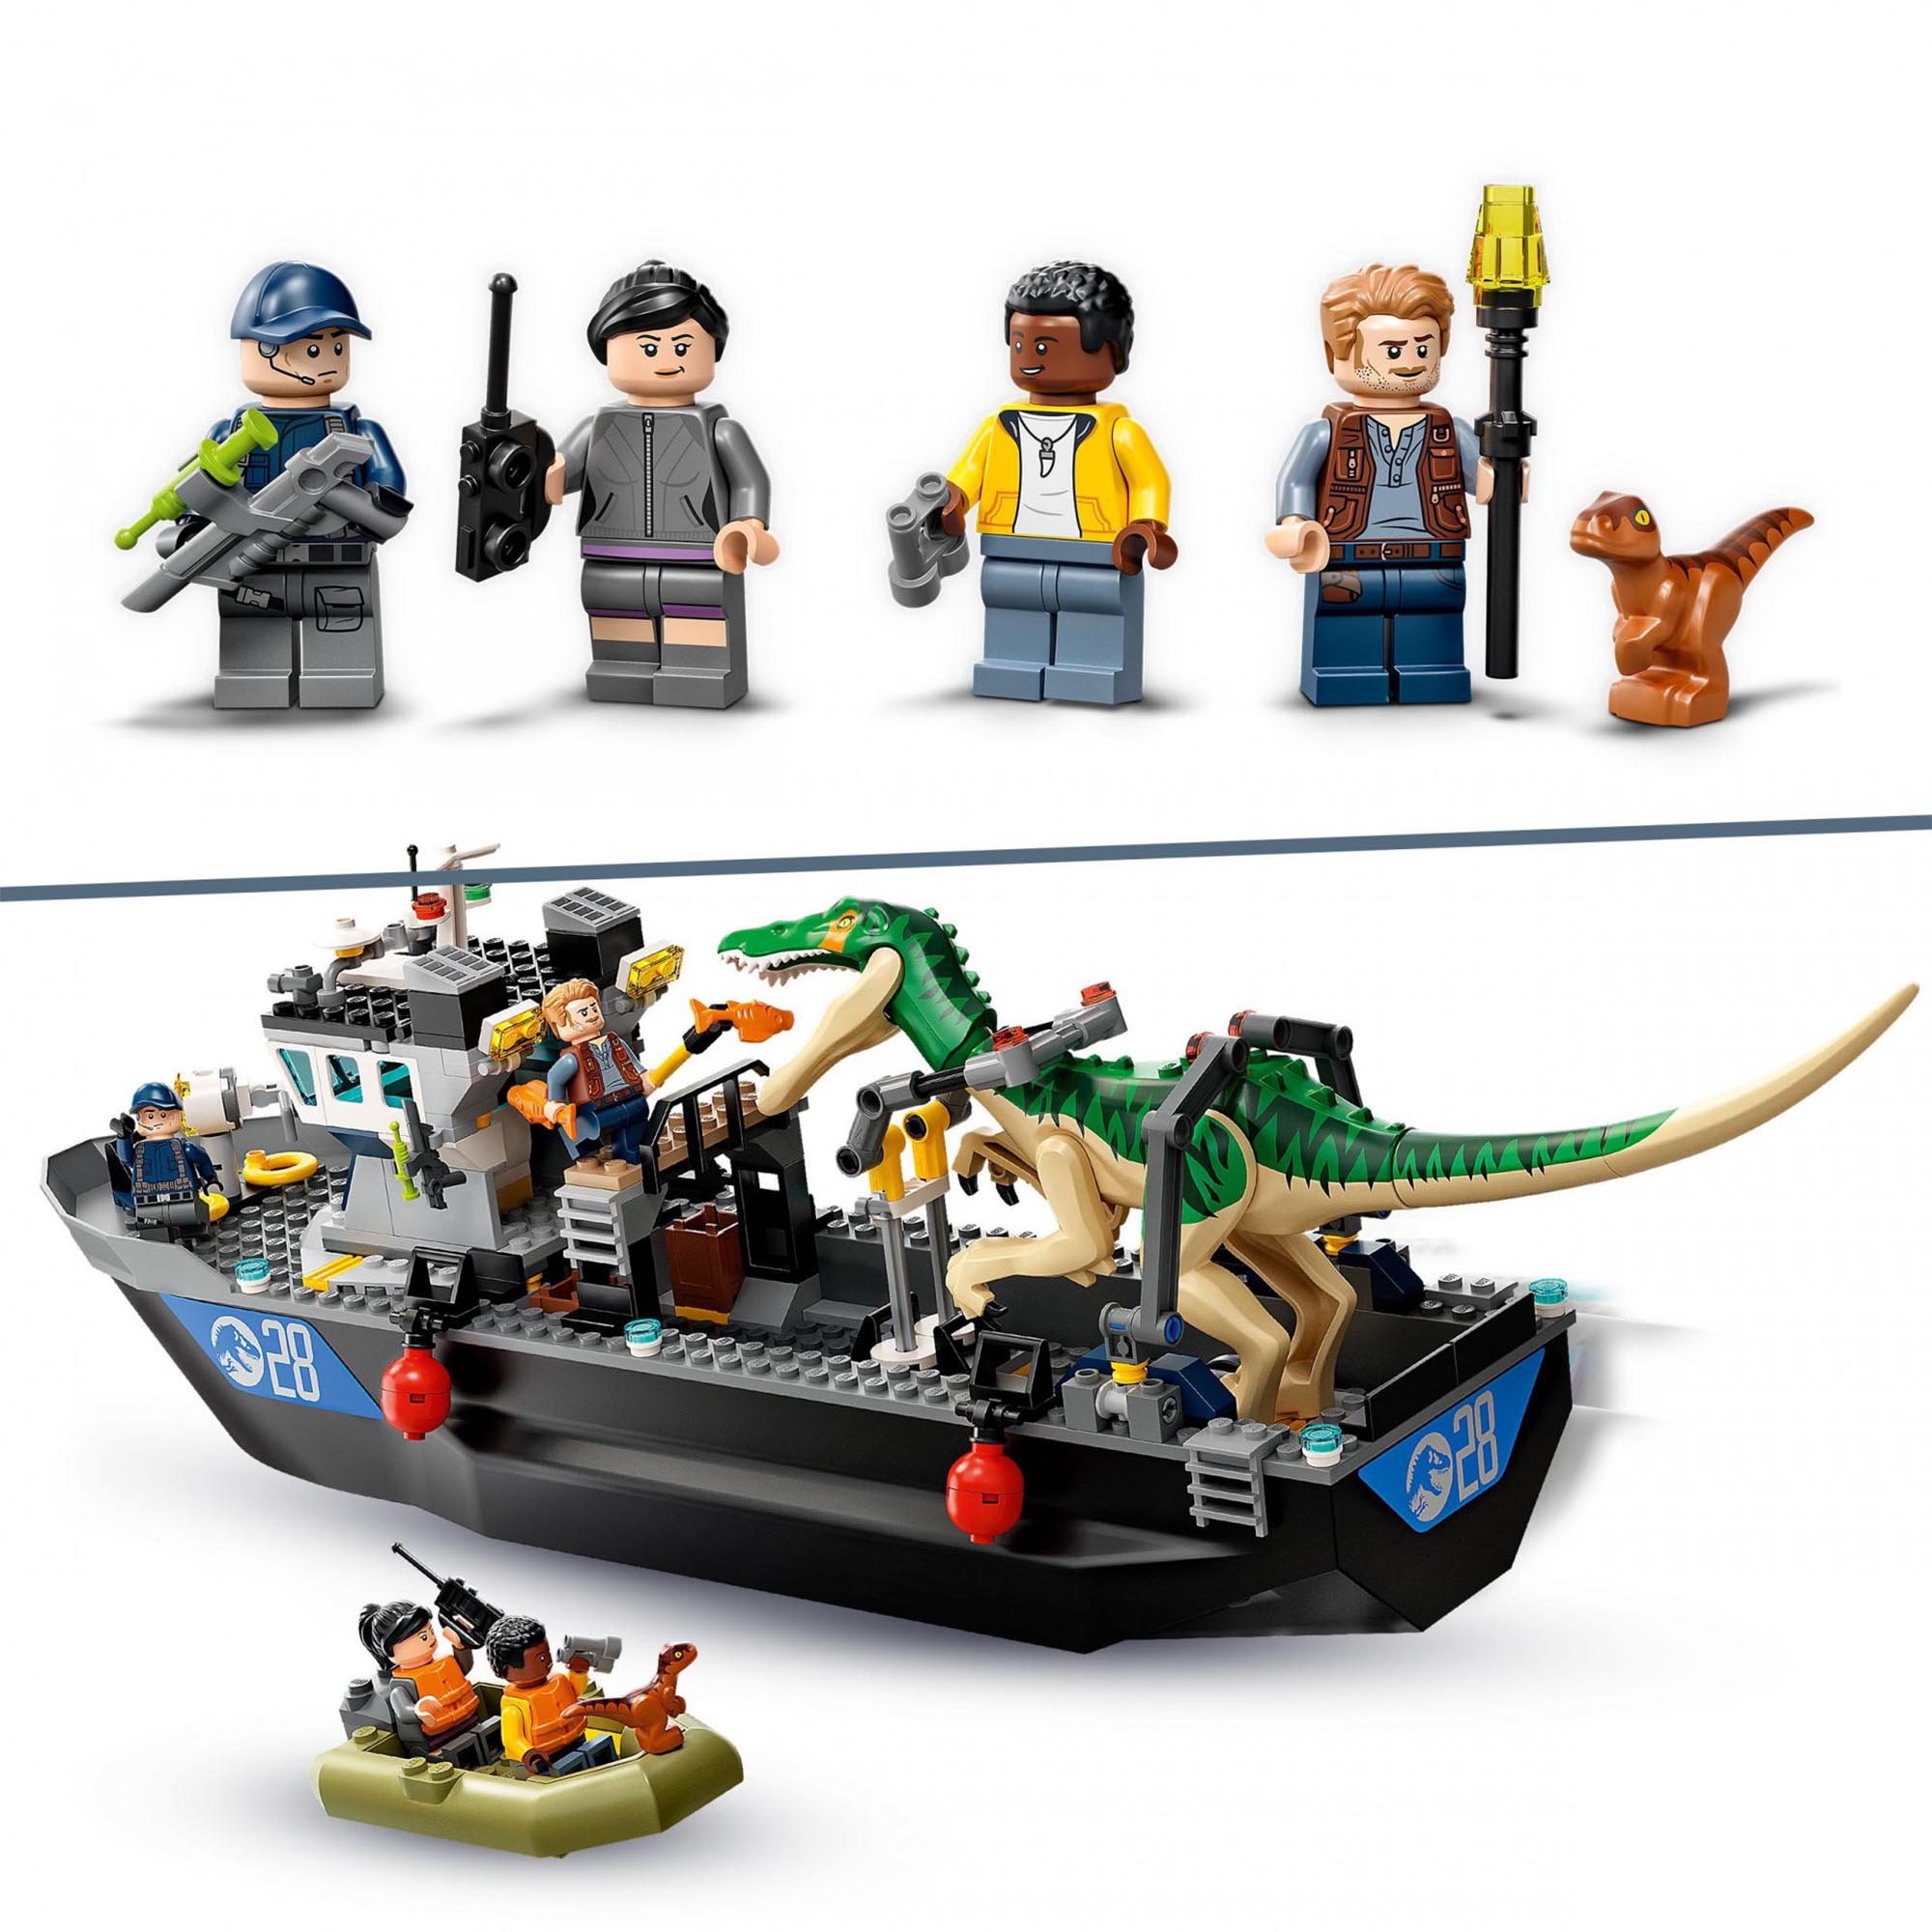 LEGO Jurassic World Fuga sulla Barca del Dinosauro Baryonyx, Regalo per Bambini  76942, , large